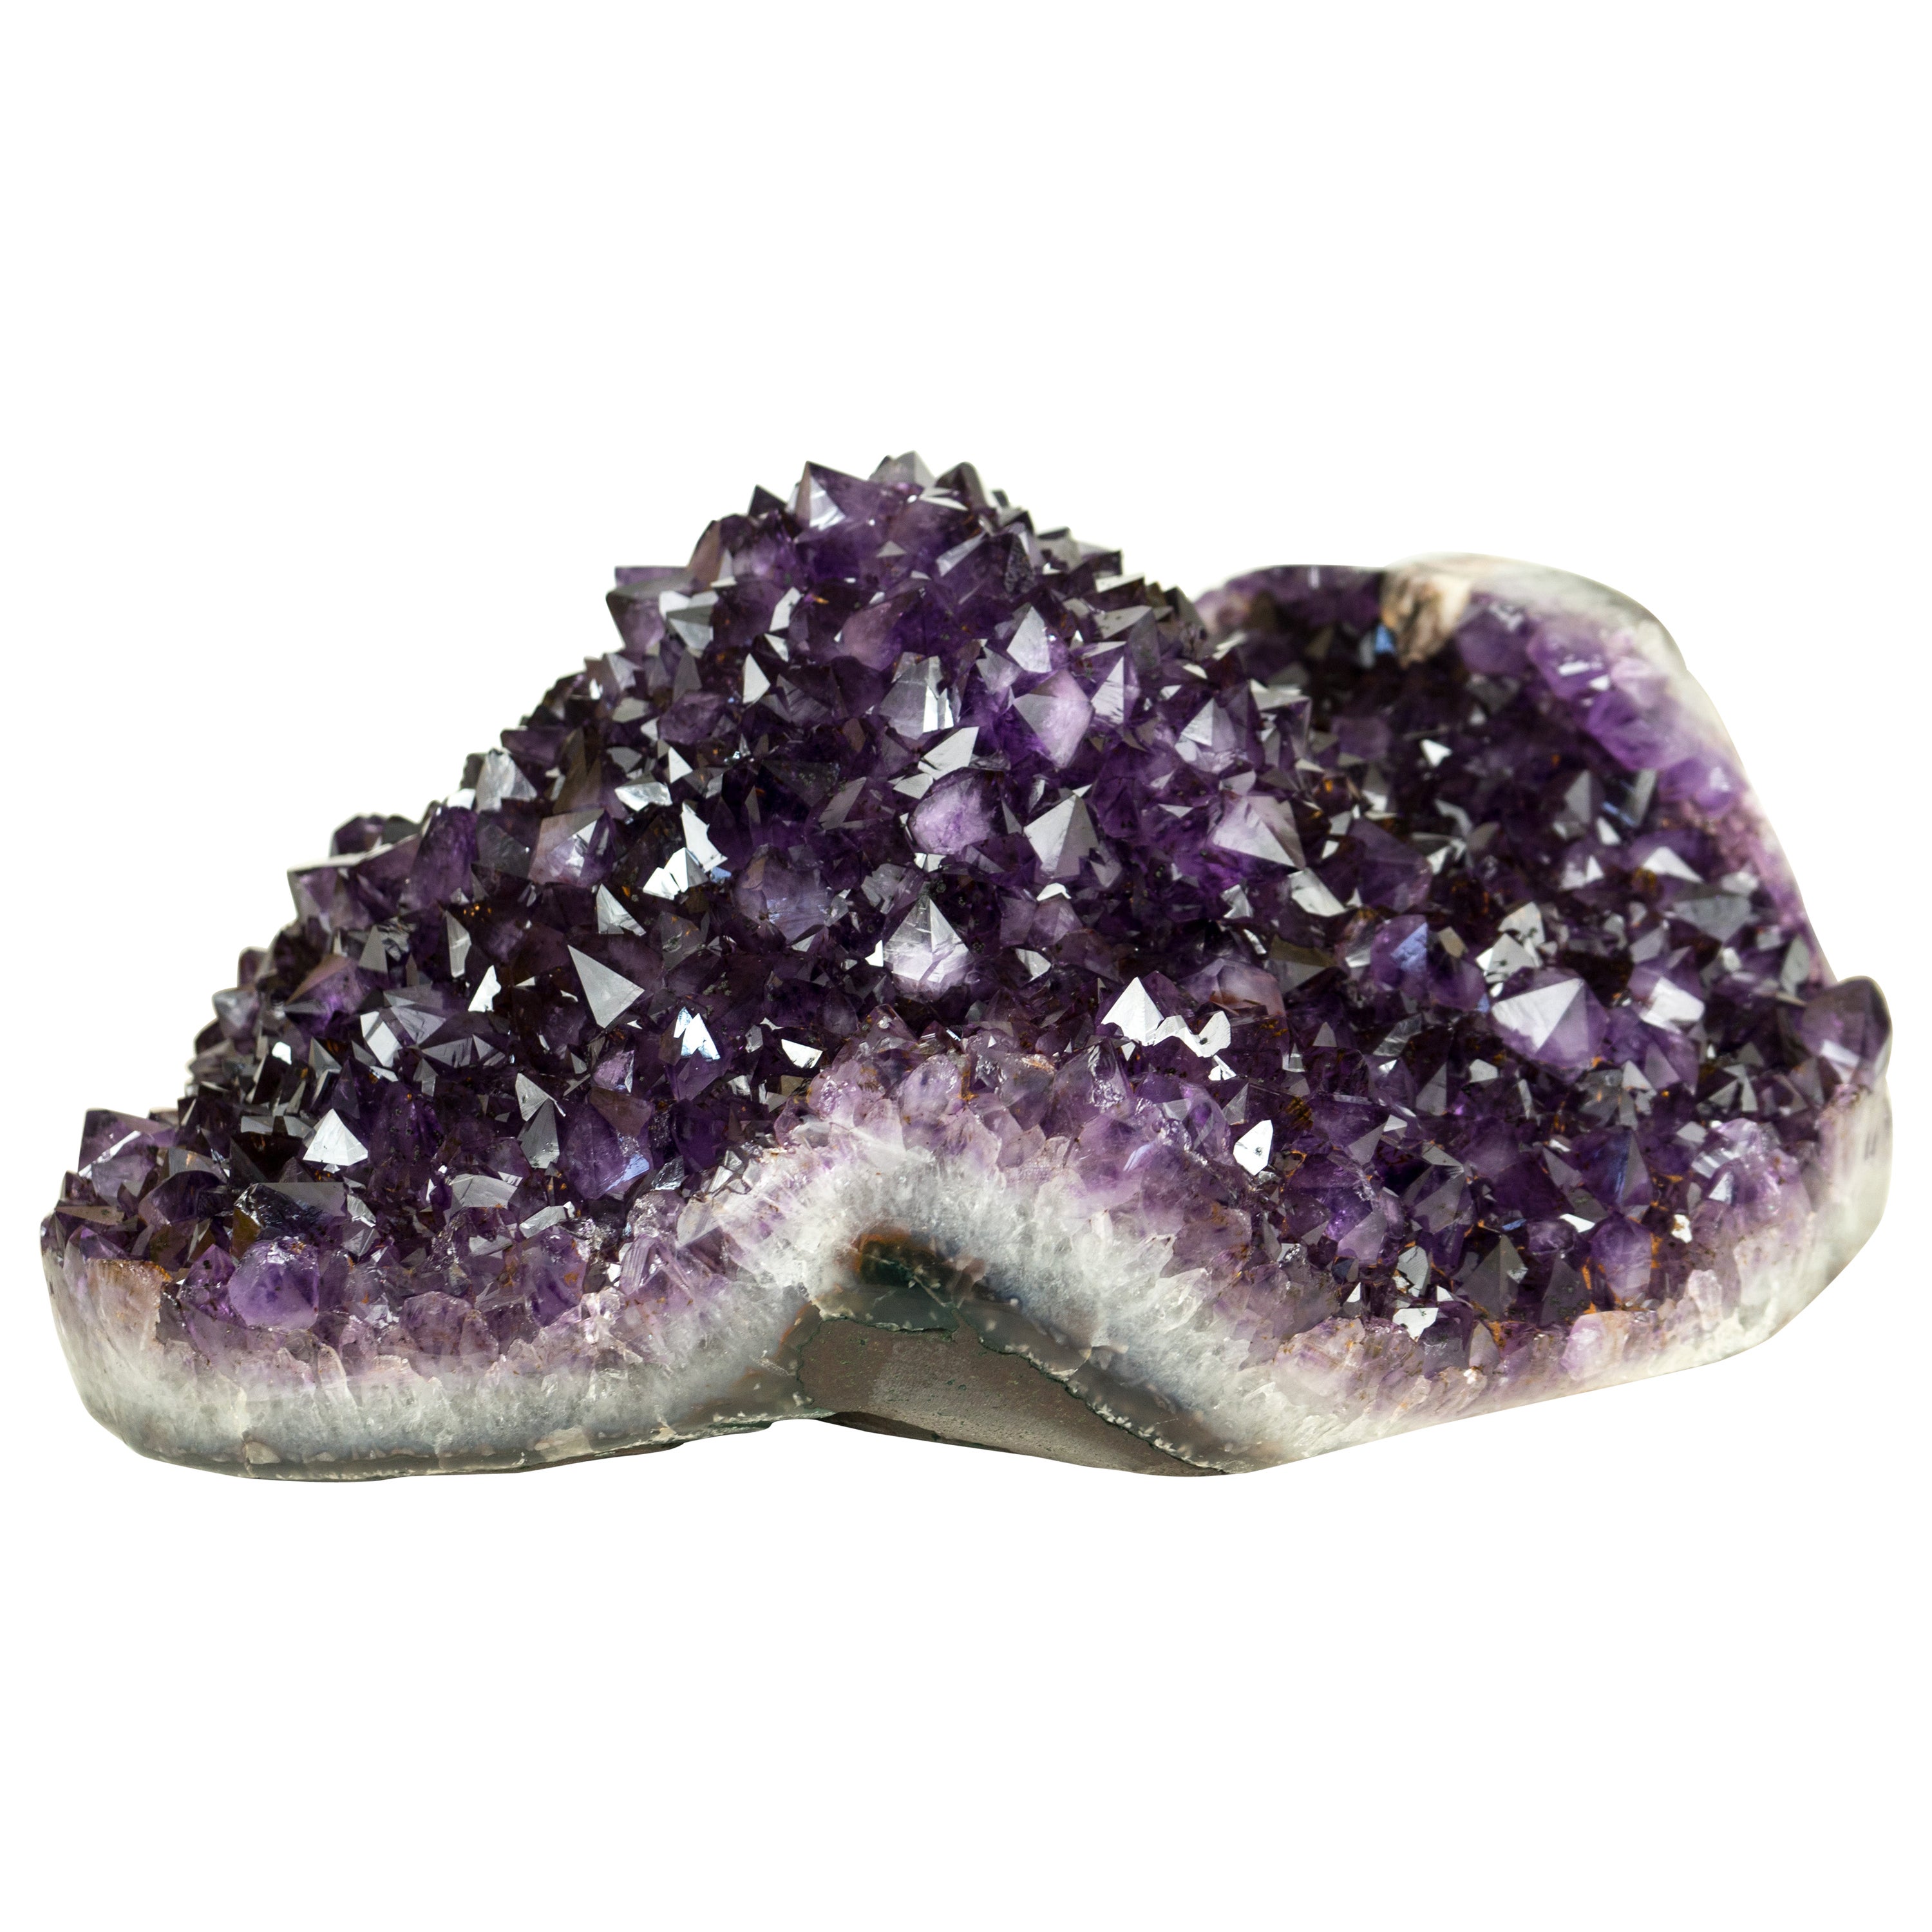 X-Large Amethyst Geode Flower with AAA Dark Purple Amethyst Druzy